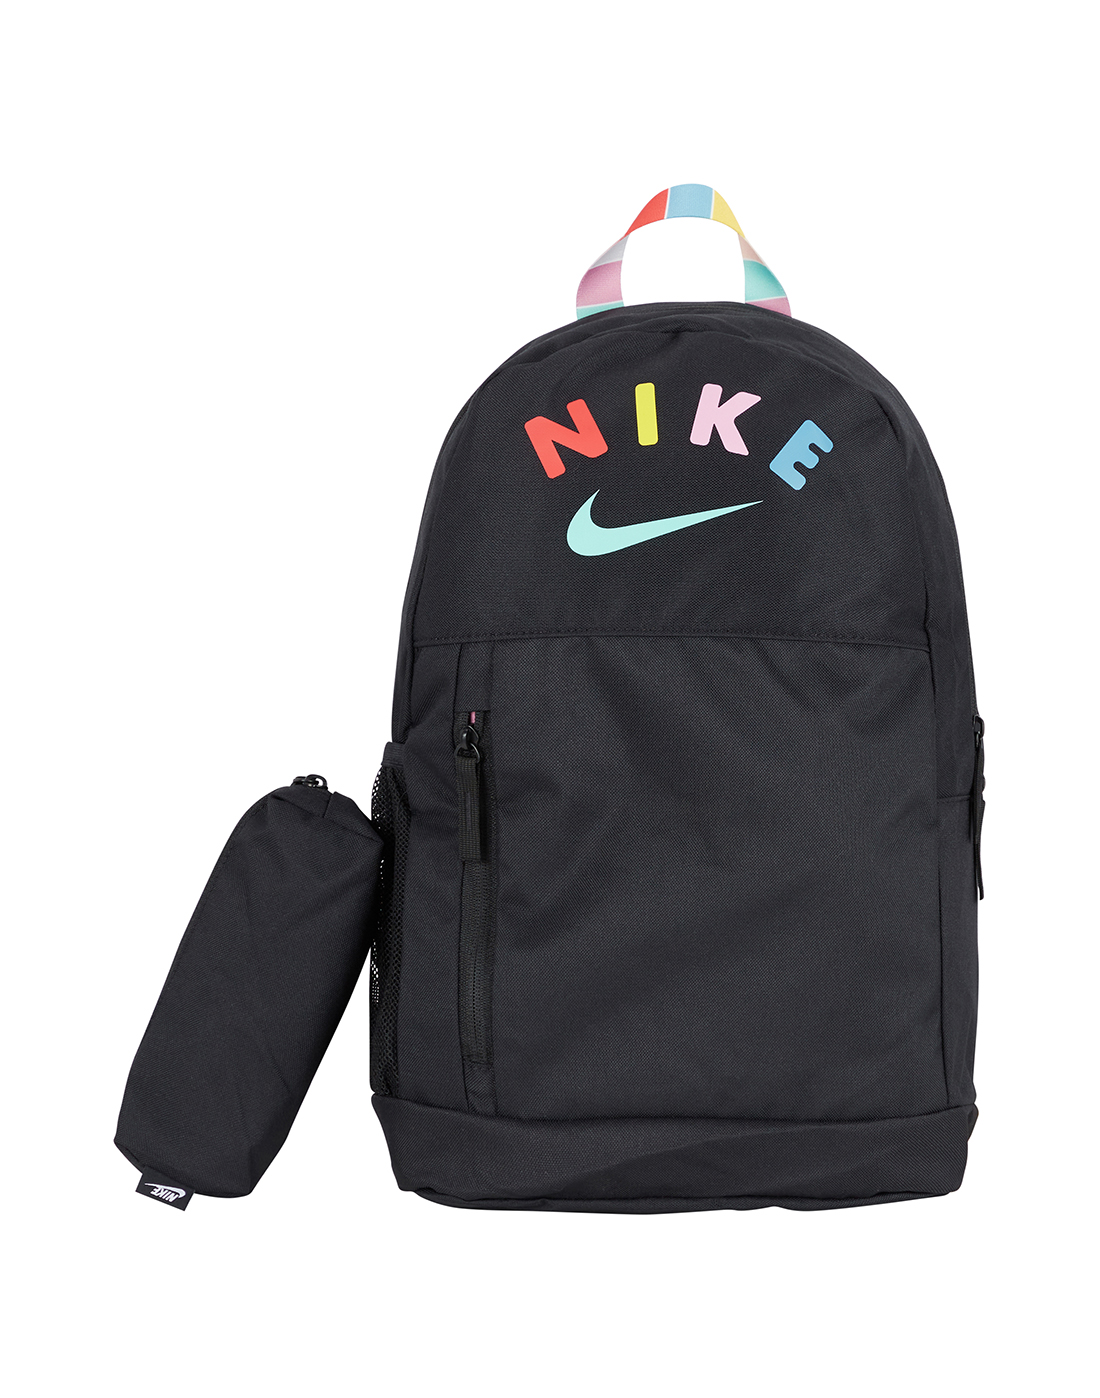 Nike Kids Elemental Backpack - Black 